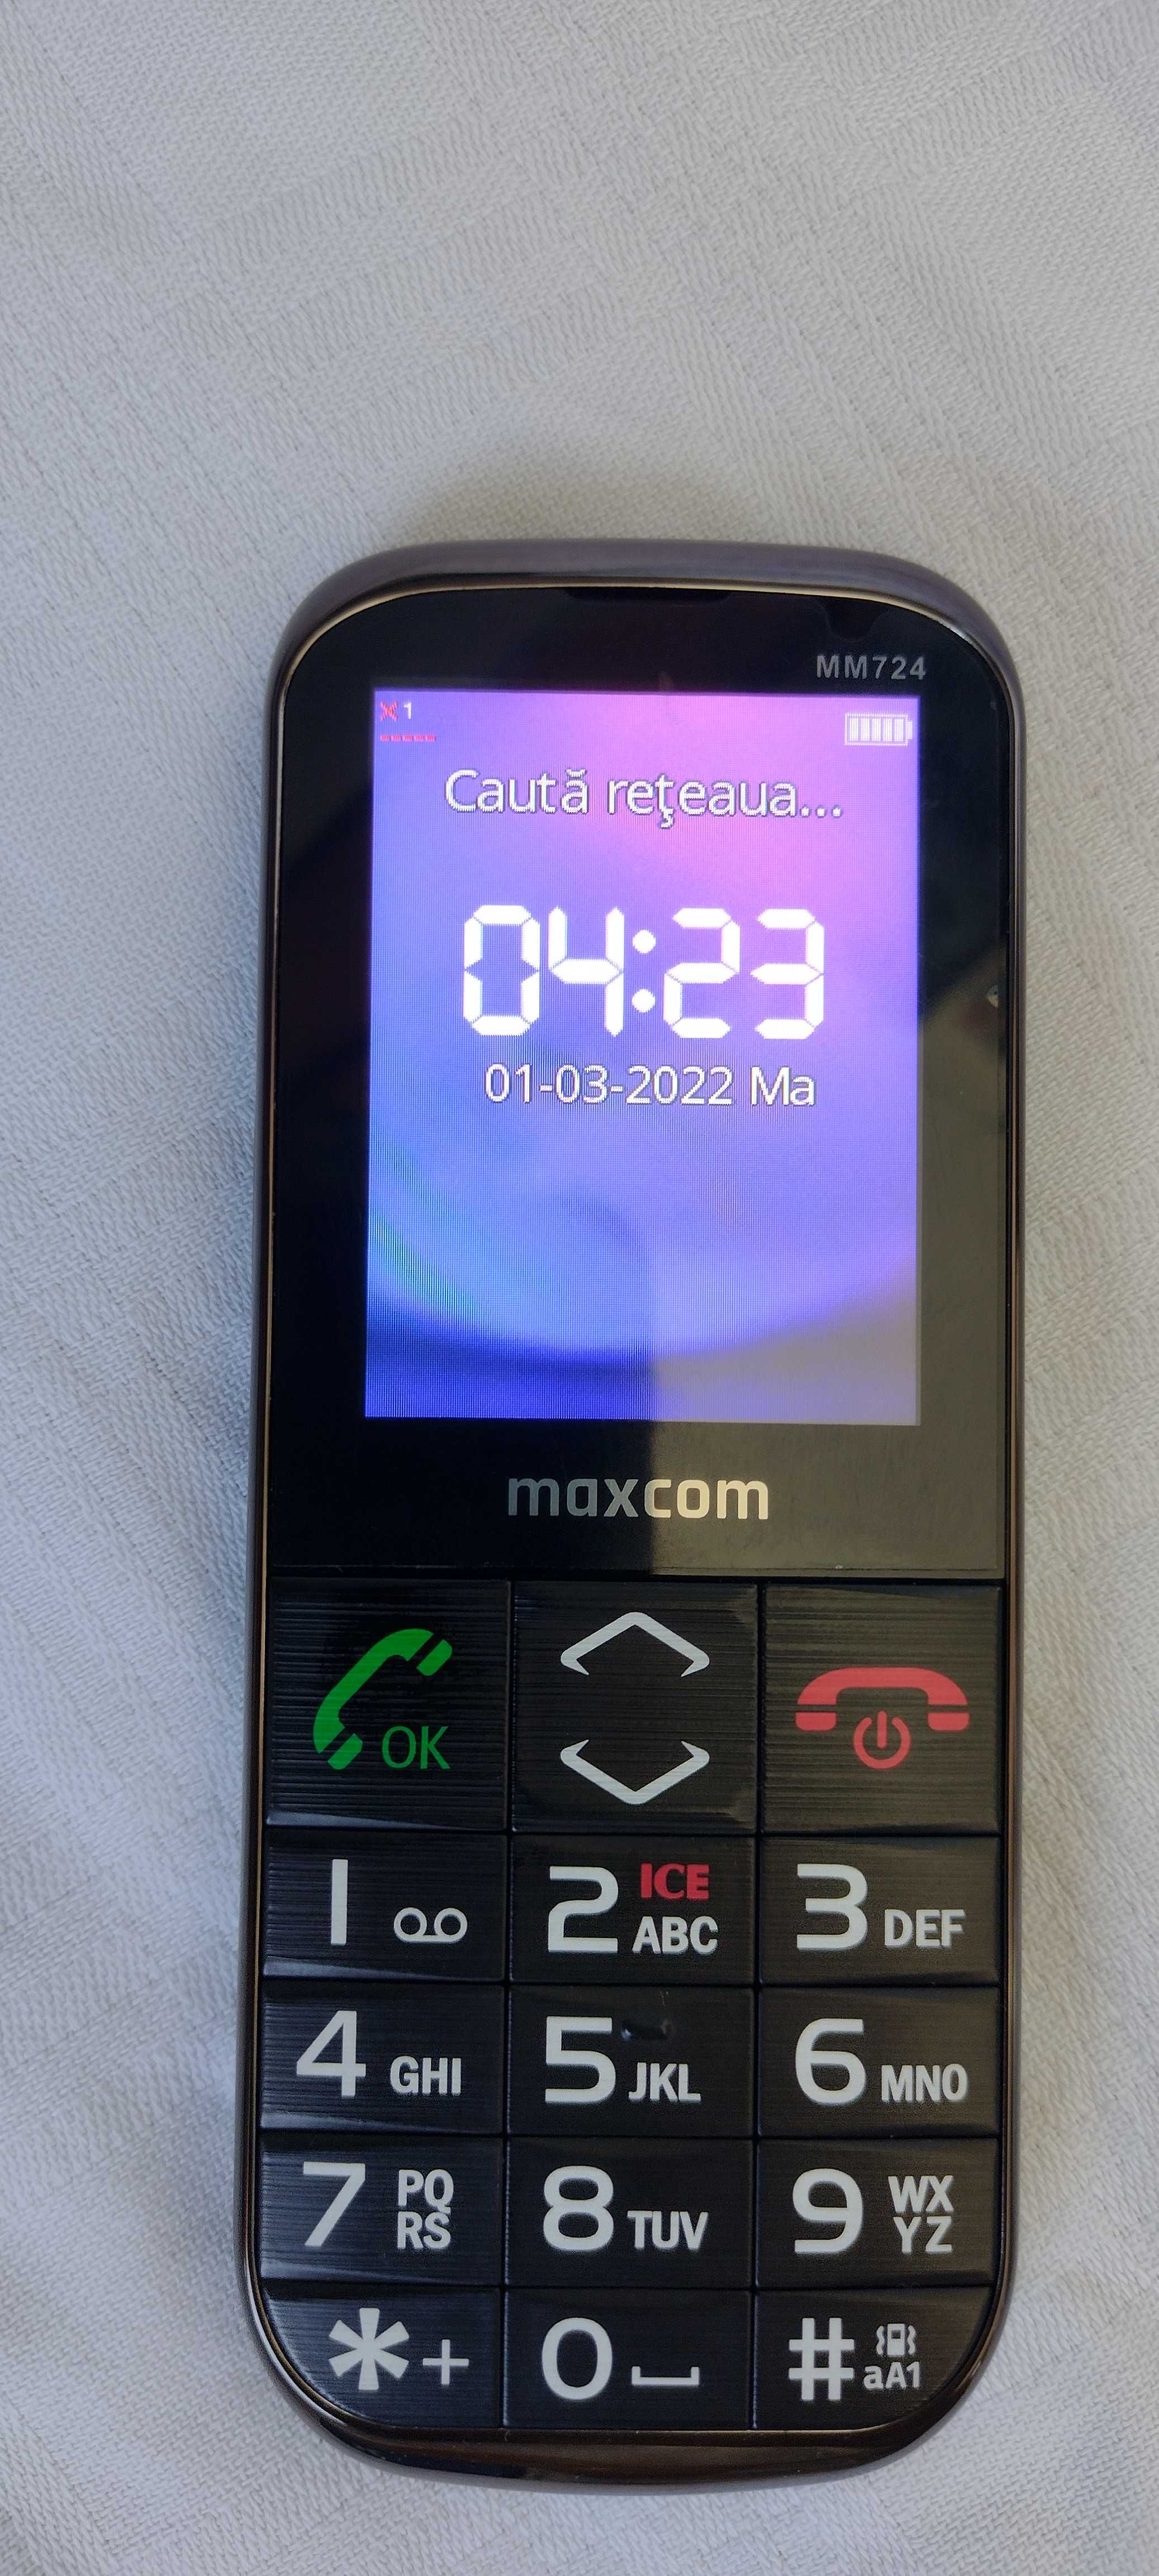 Maxxcom MM724 telefon cu butoane,  pentru seniori